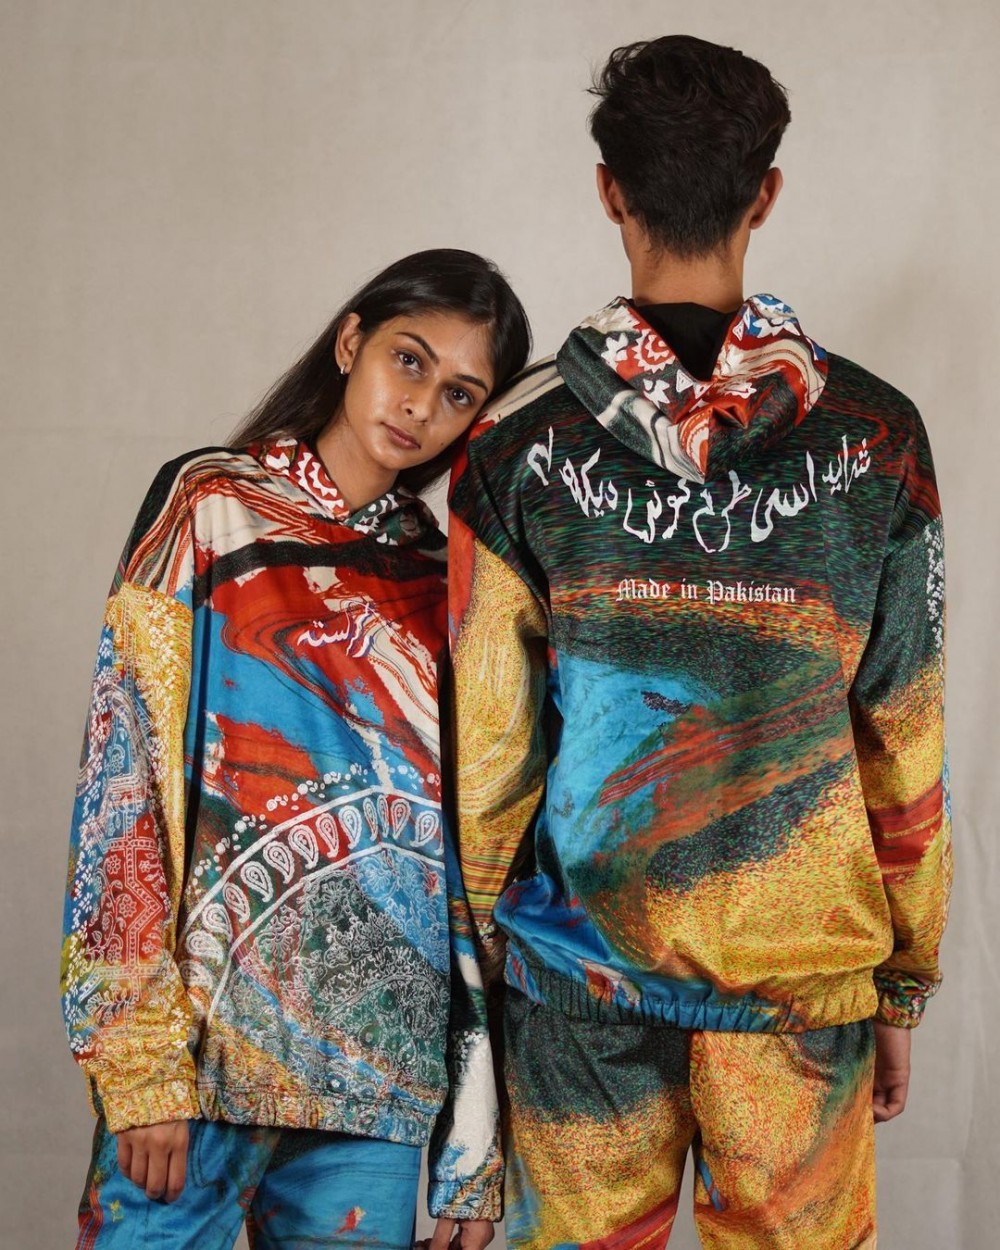 How Rastah Champions Pakistani Culture Through Streetwear